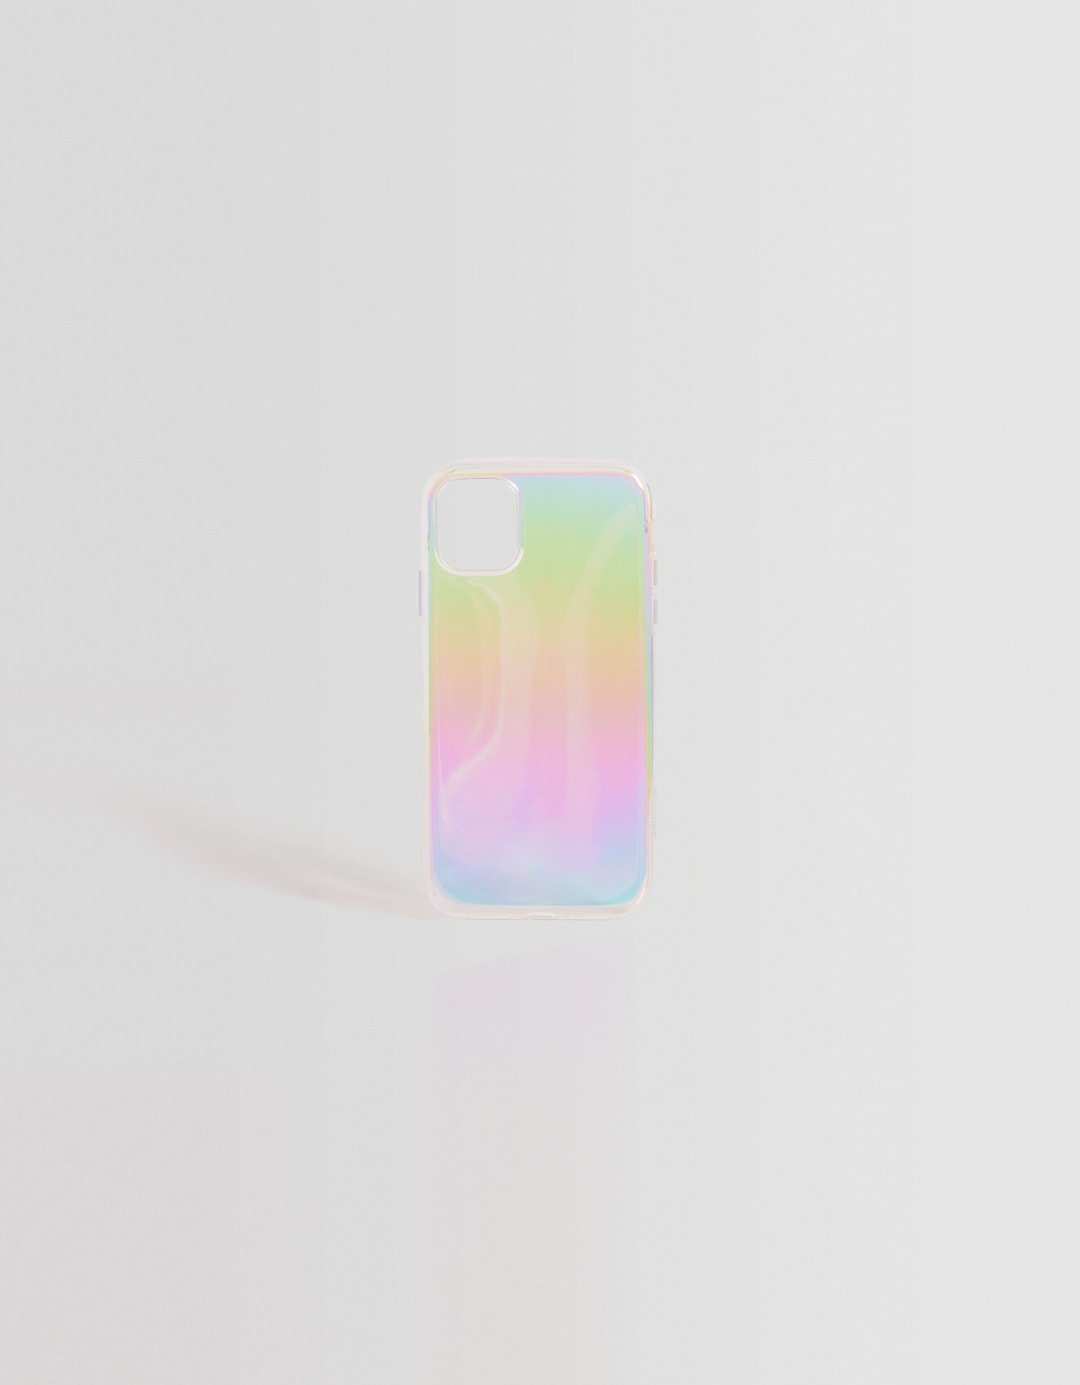 Carcasa móvil iPhone iridiscente